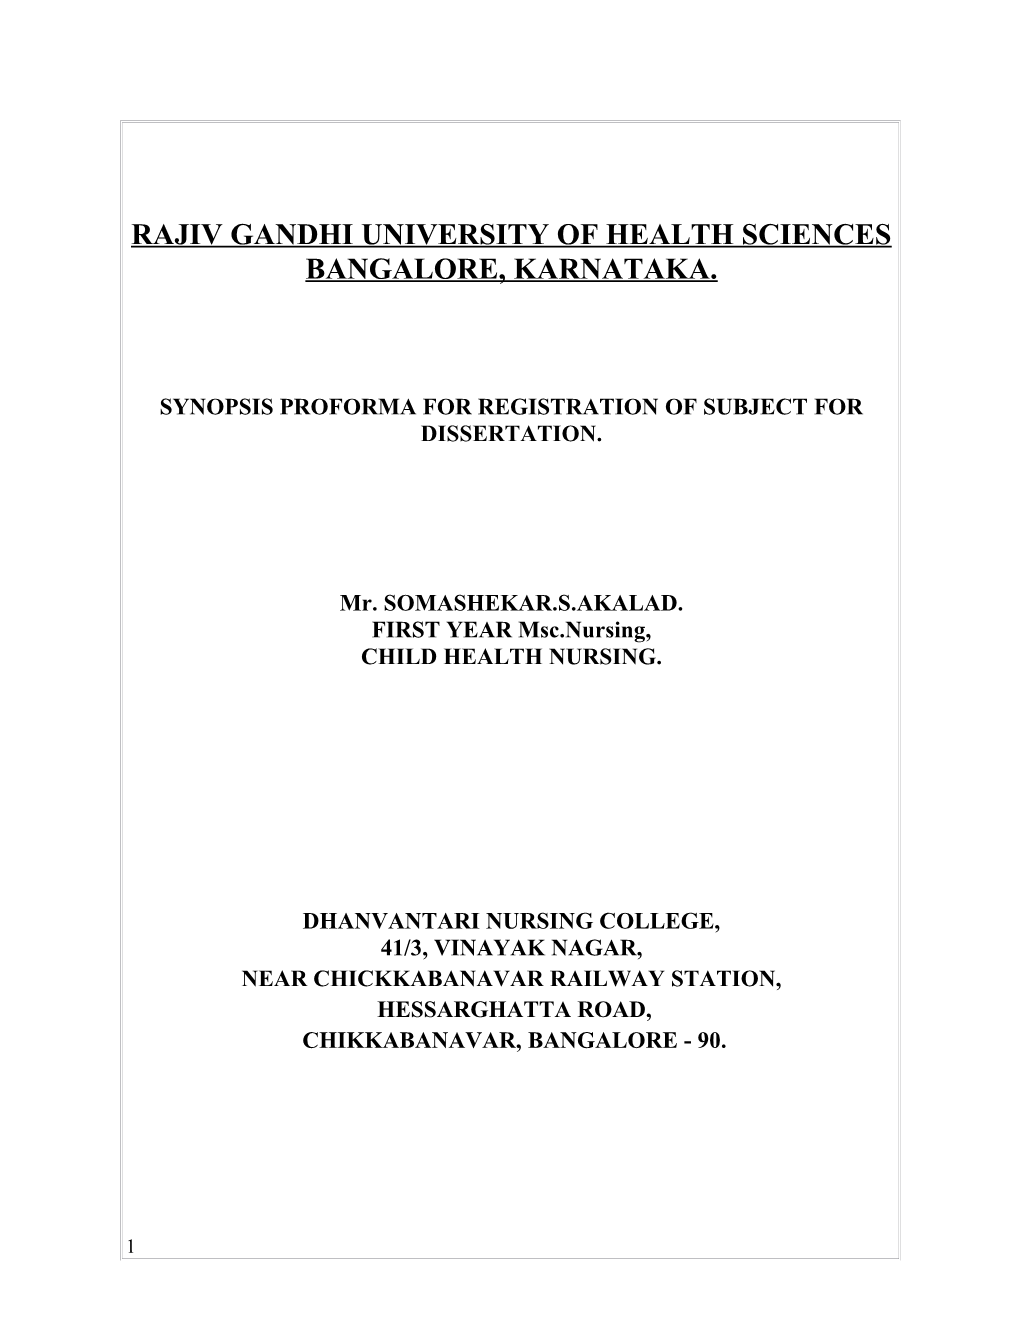 Rajiv Gandhi University of Health Sciences Bangalore, Karnataka s28